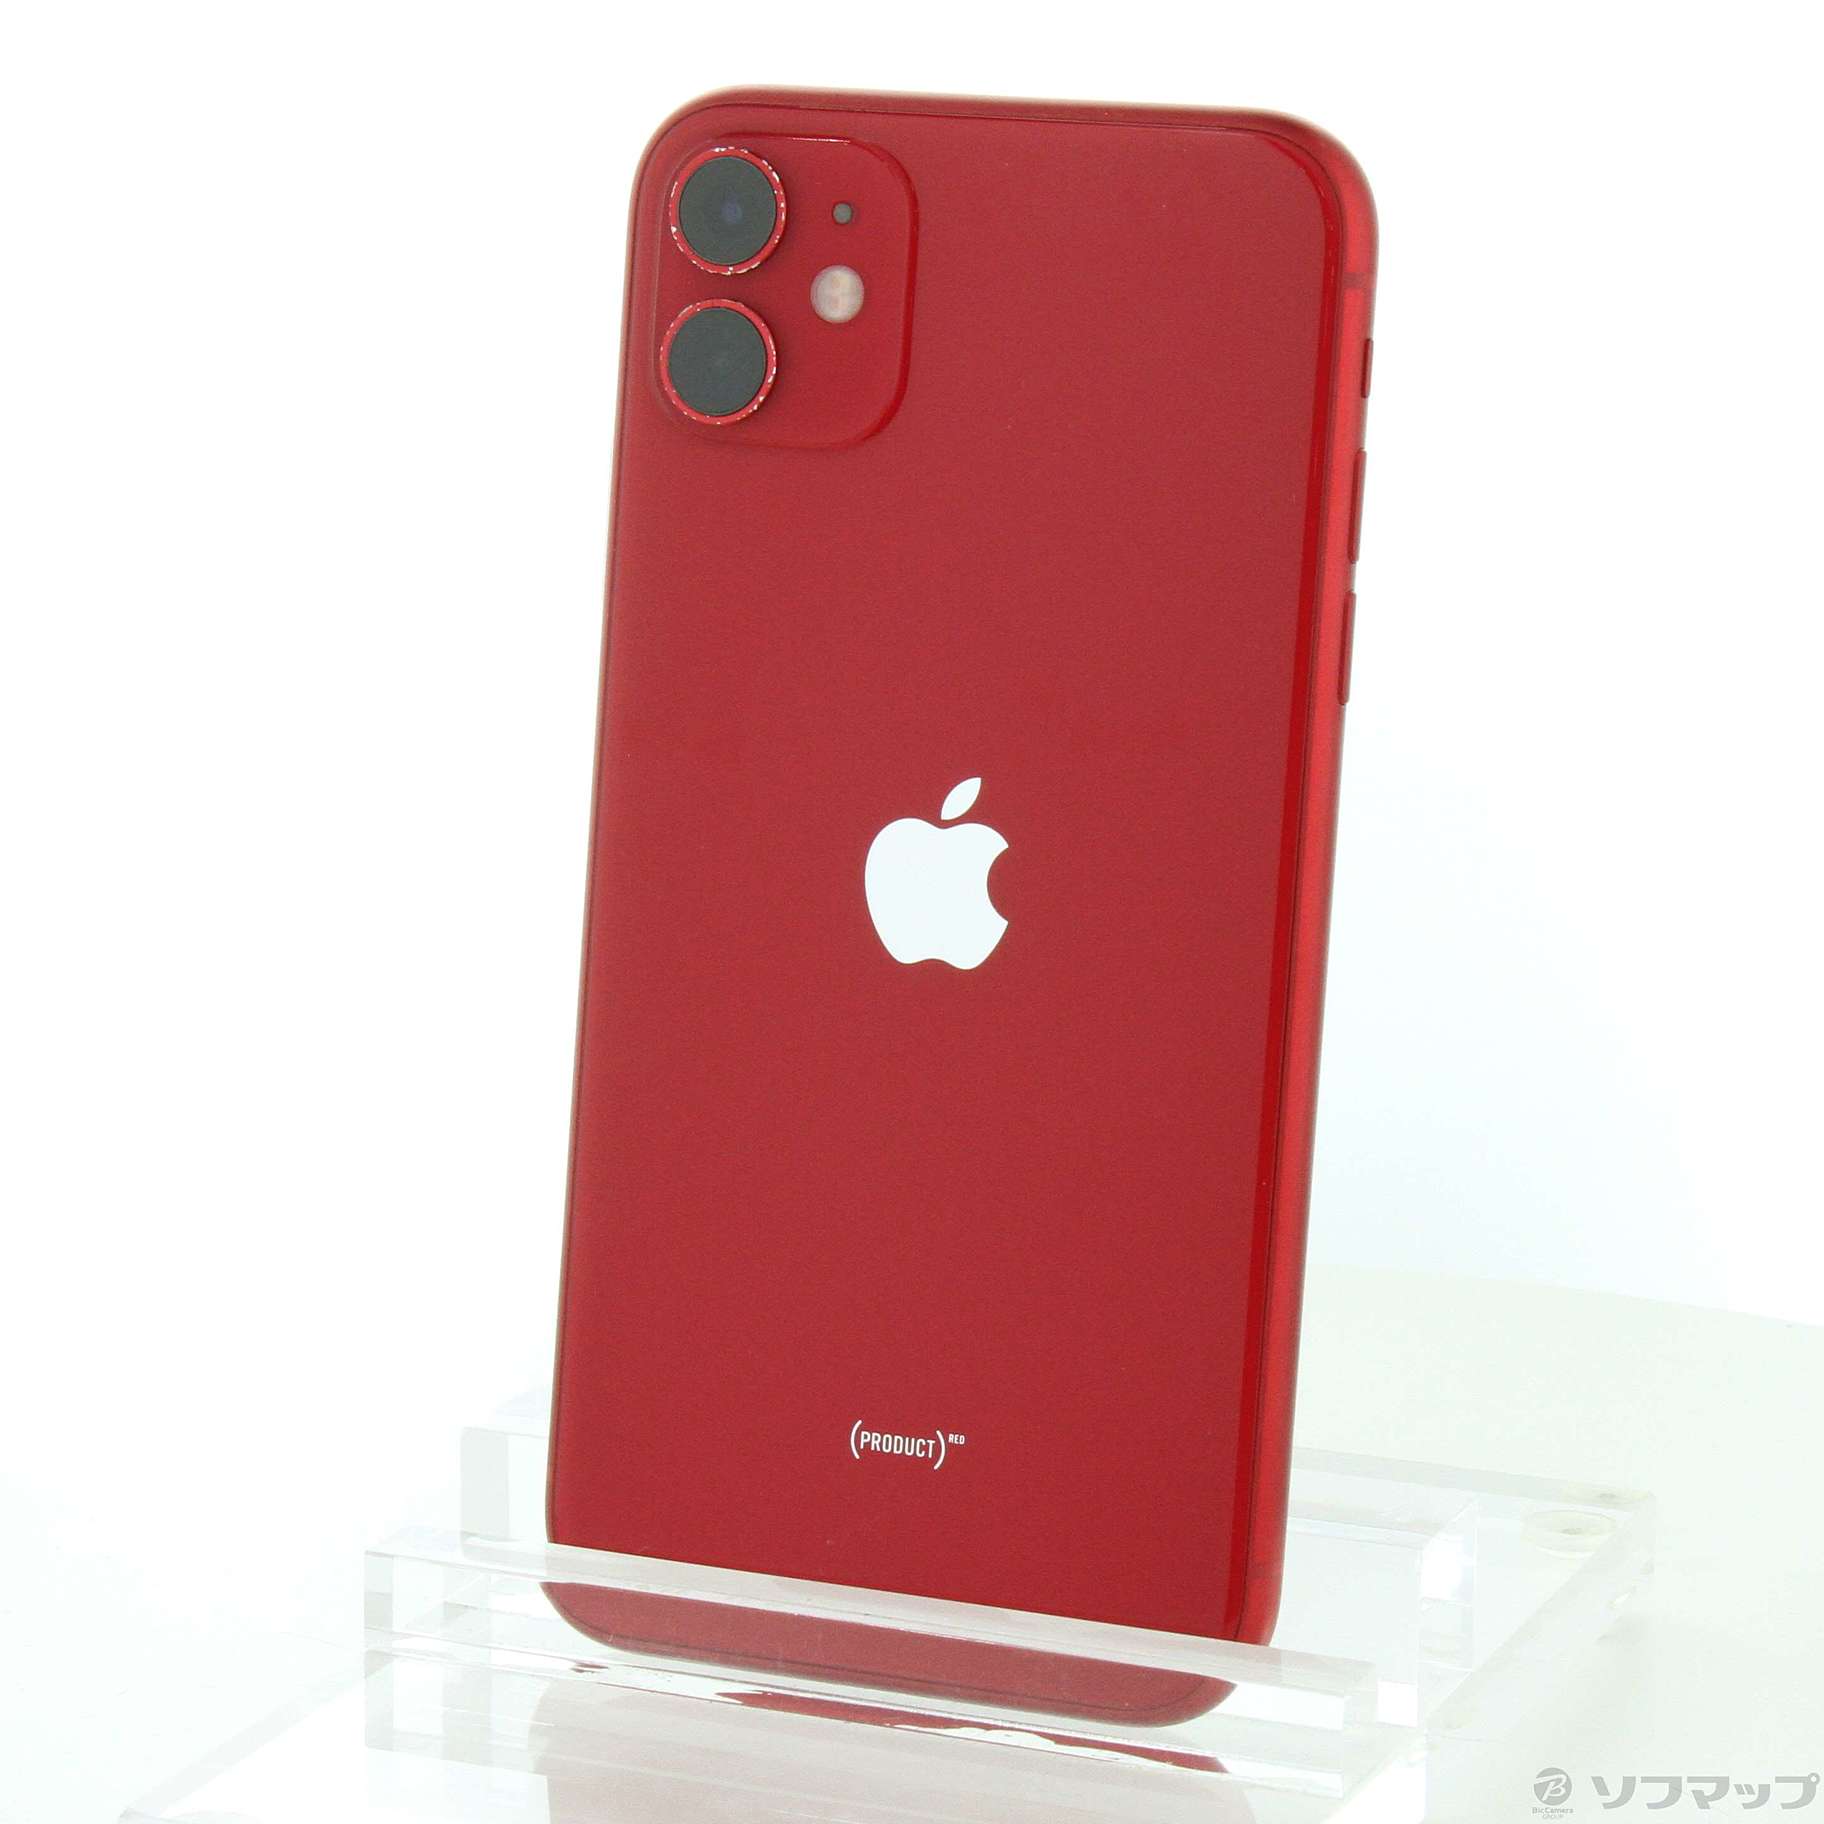 iPhone 11 (PRODUCT)RED 64GB SIMフリー